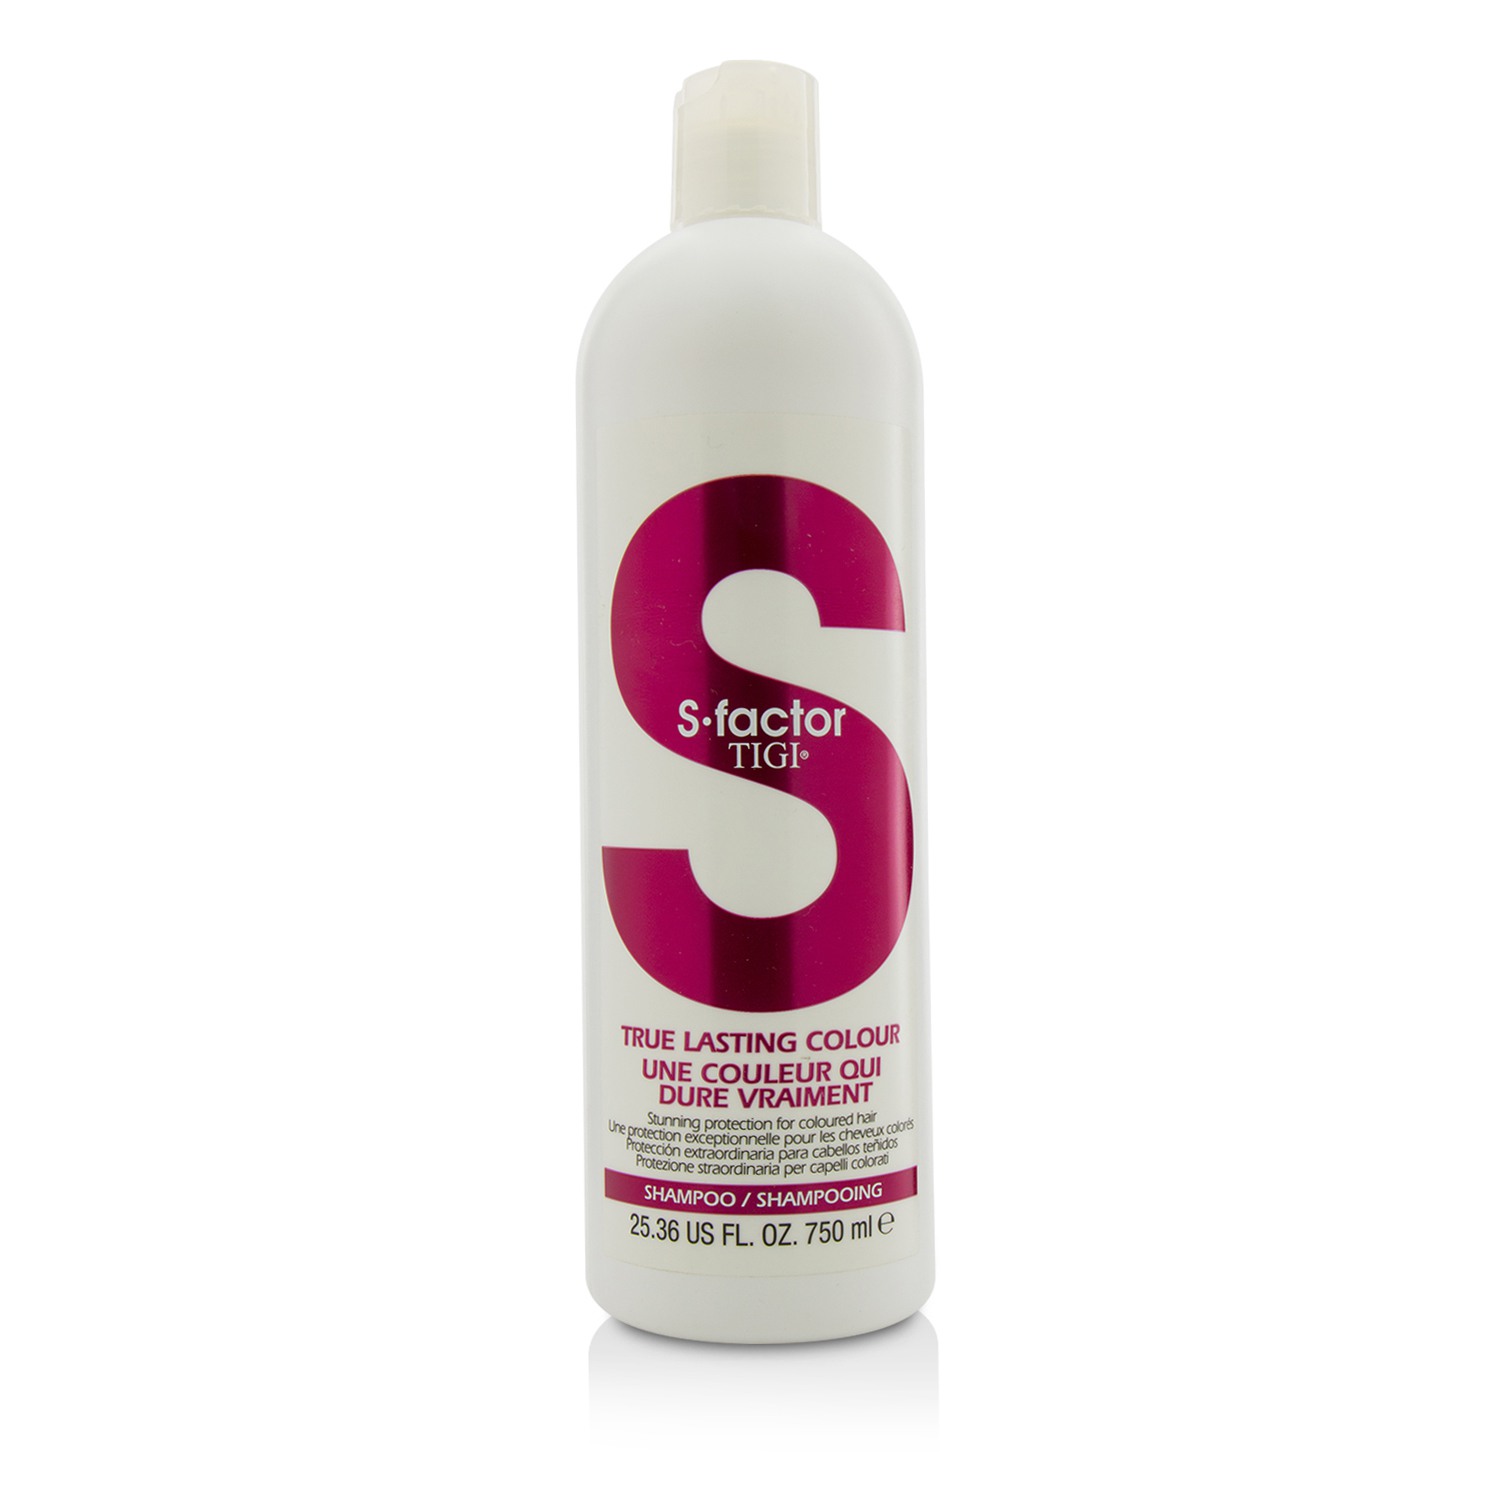 S Factor True Lasting Colour Shampoo (Stunning Protection For Coloured Hair) Tigi Image